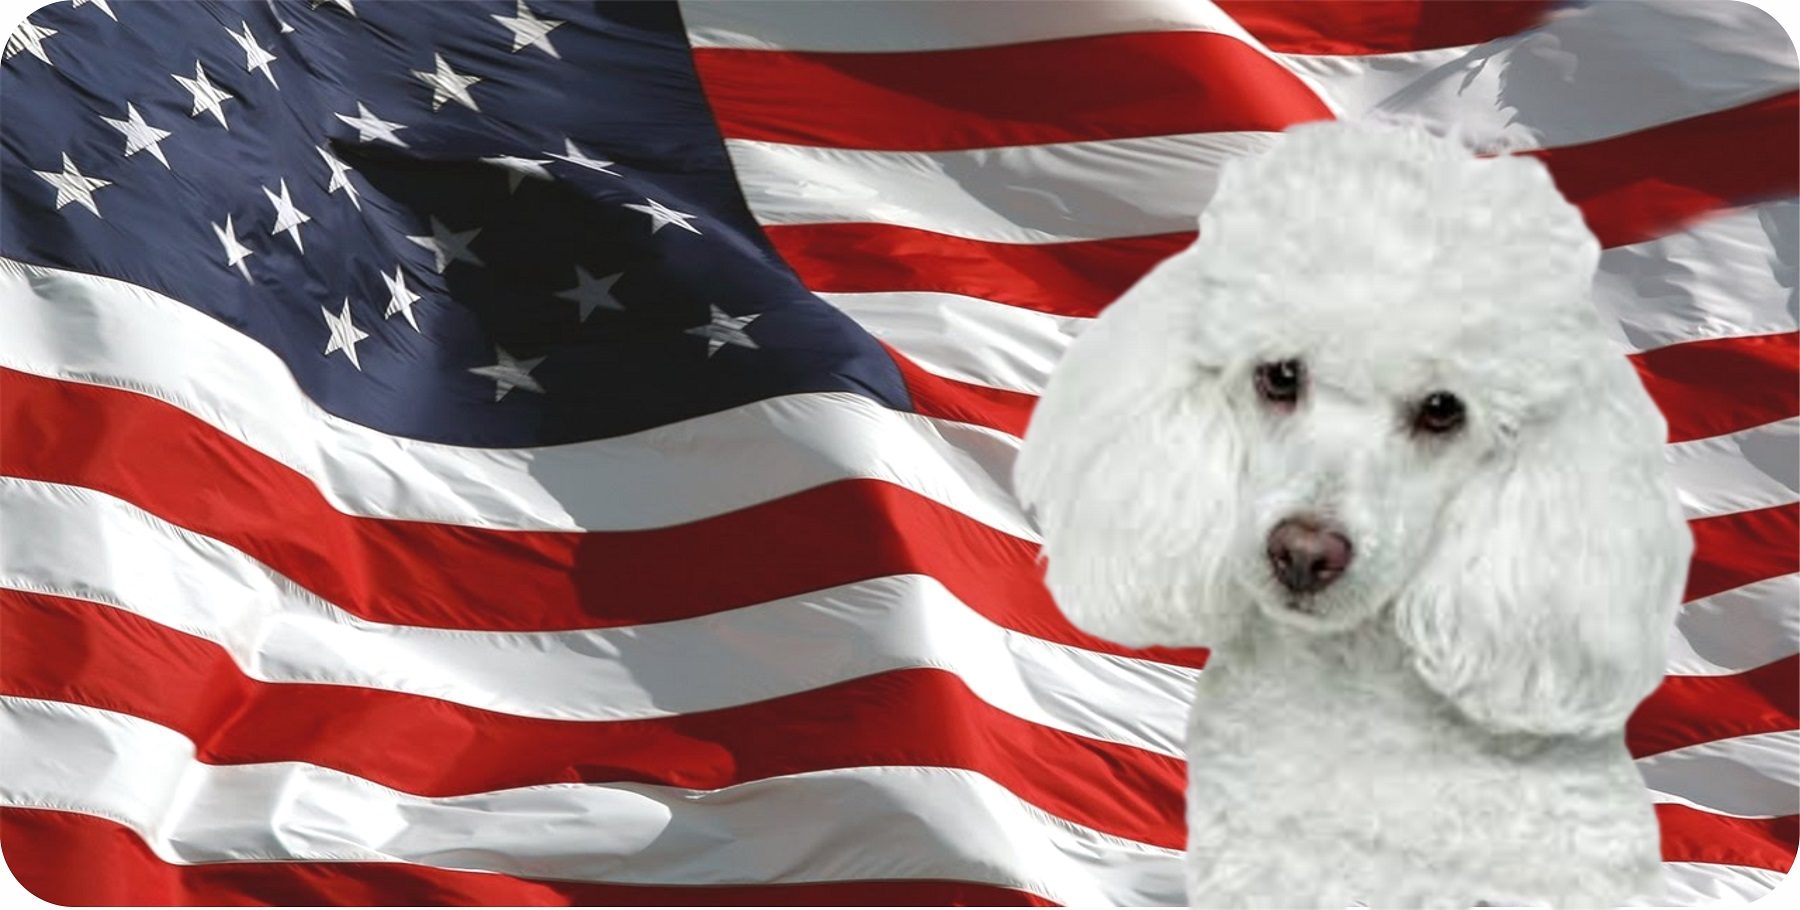 Poodle On U.S. FLAG Photo License Plate